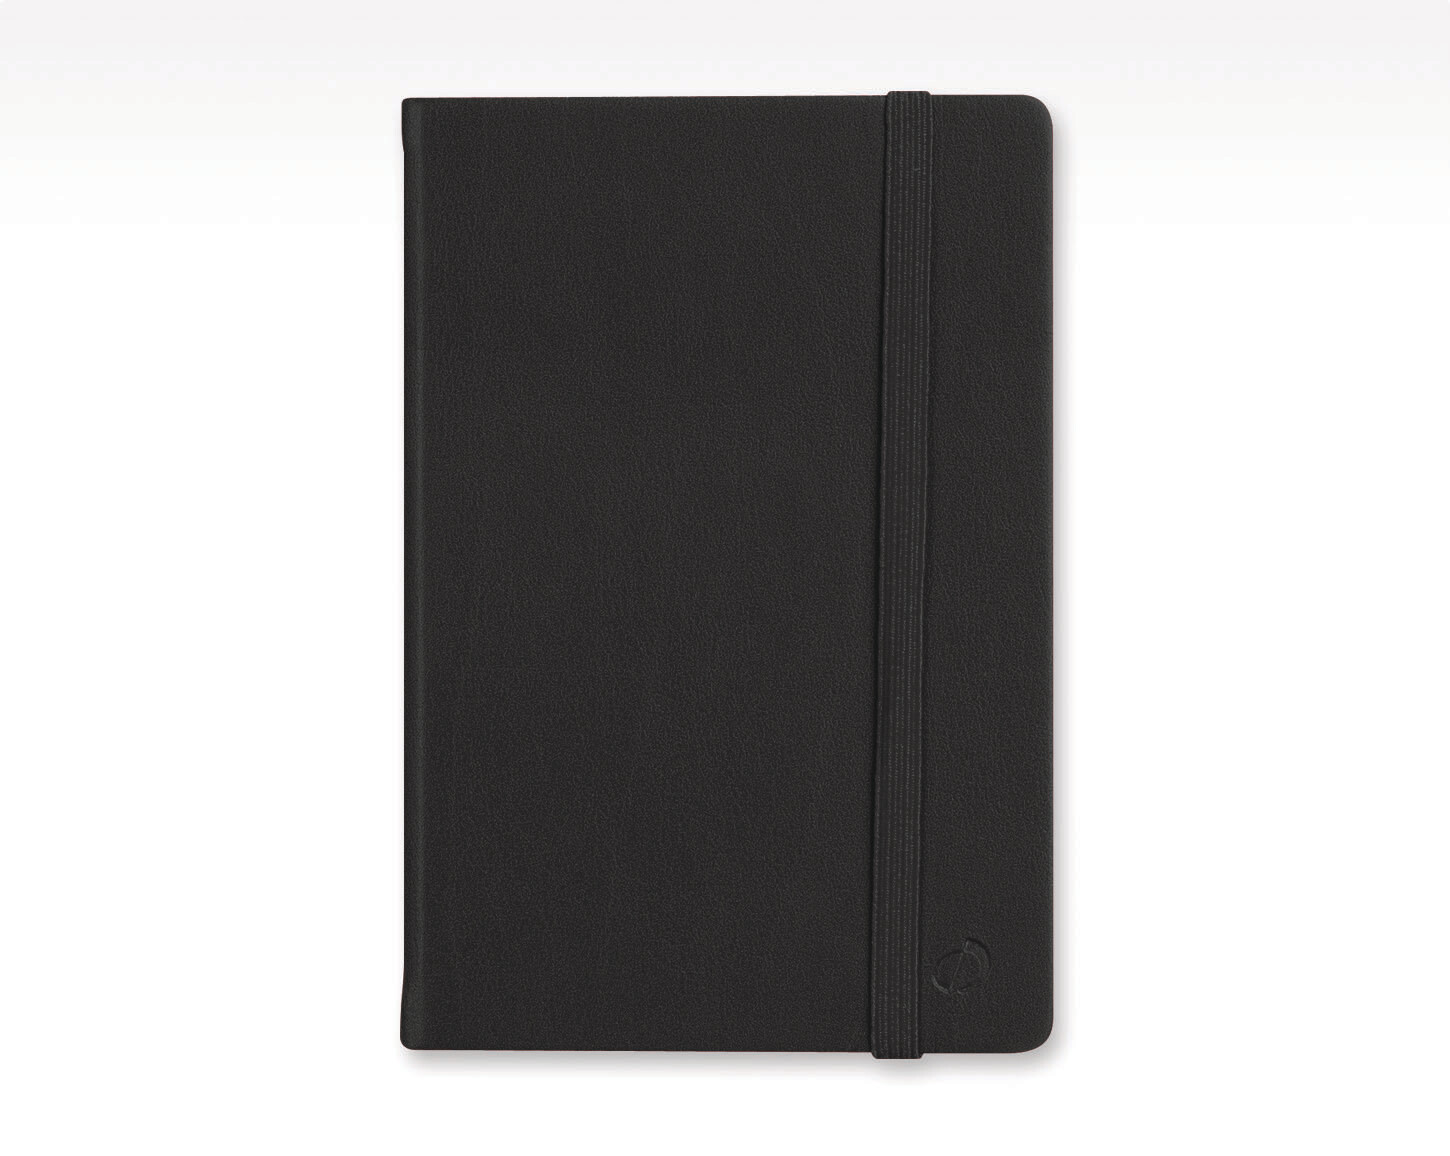 Notebook, Lined, Habana Black, 6.25" x 9.5"